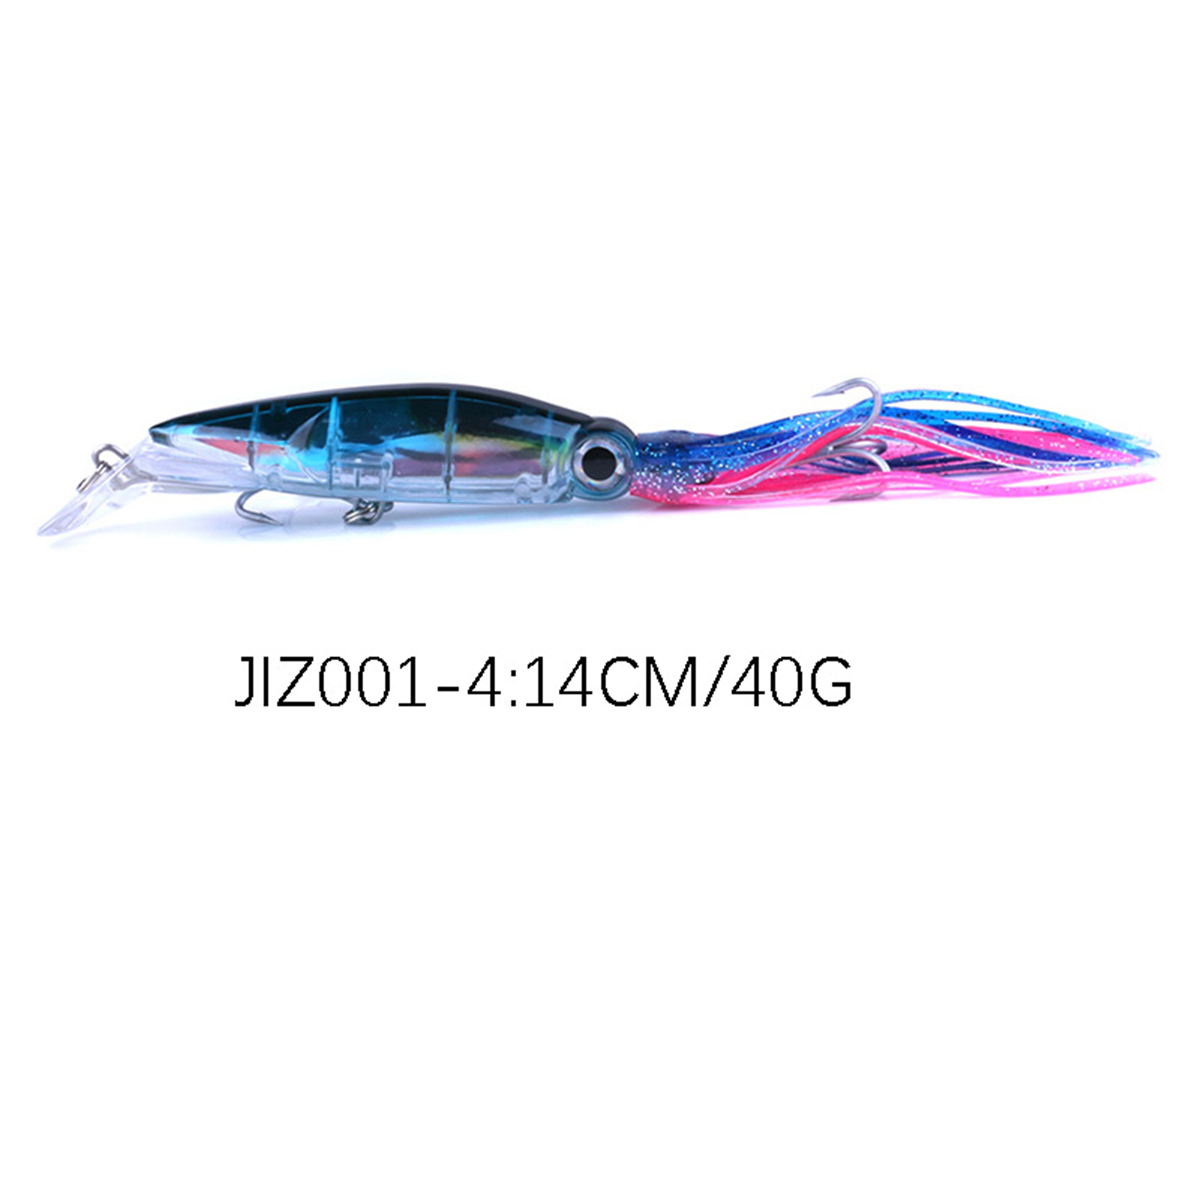 ZANLURE-Skirted-Squid-Lure-1pcs-14cm40g--Hard-Body-Trolling-Tuna-Fishing-Lure-1553676-6